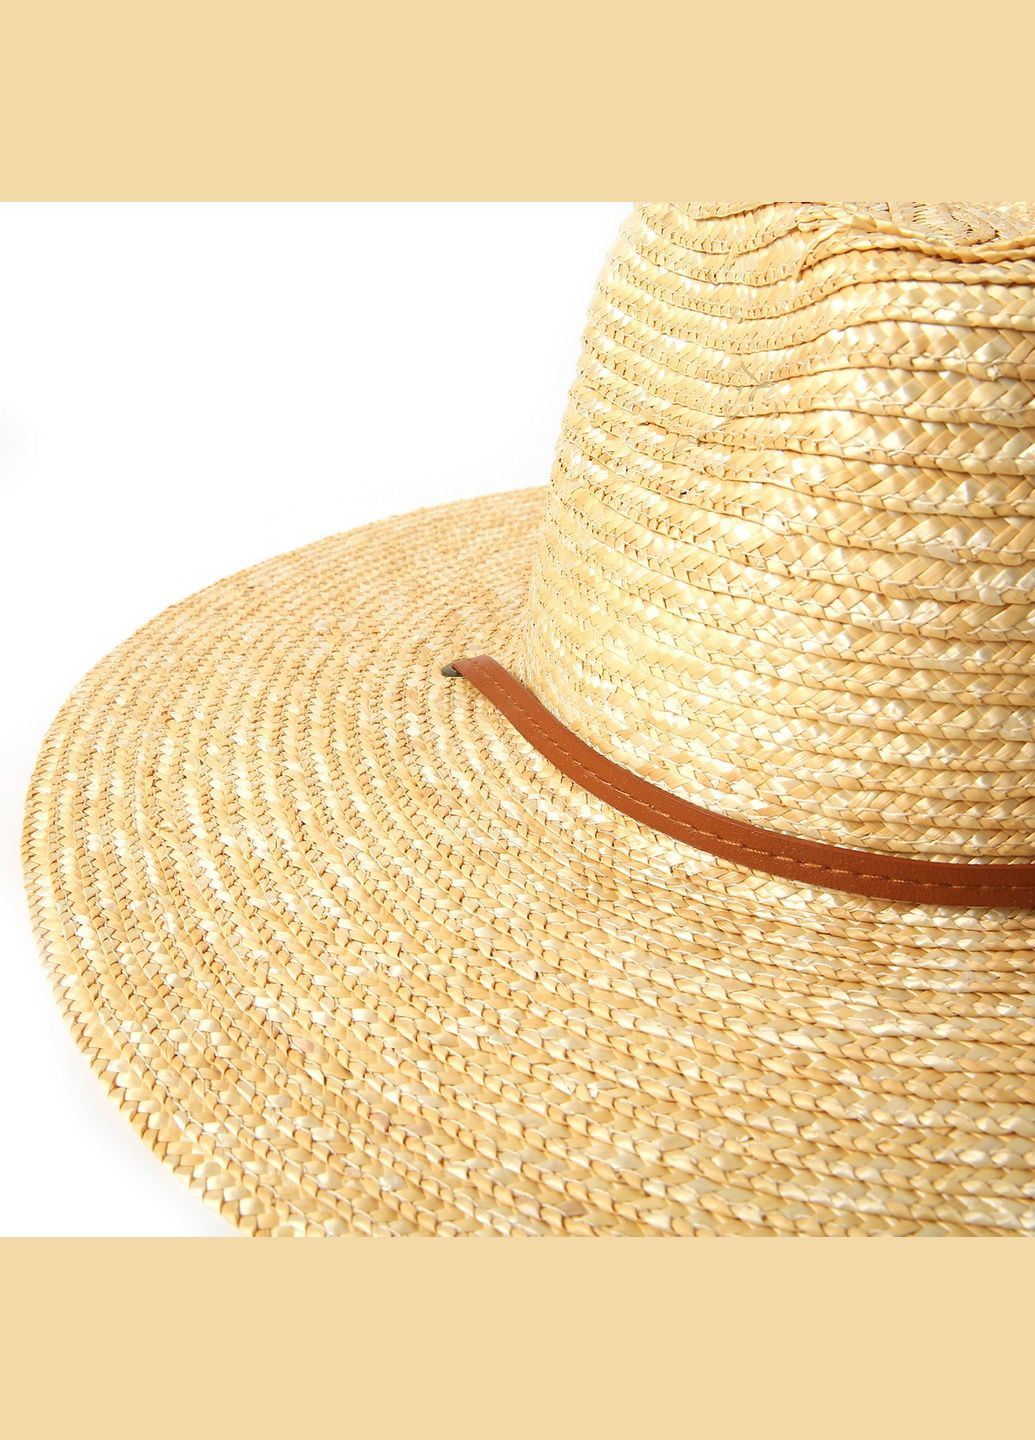 Шляпа ковбойка мужская солома бежевая MADELINE 844-187 LuckyLOOK 844-187м (289478393)